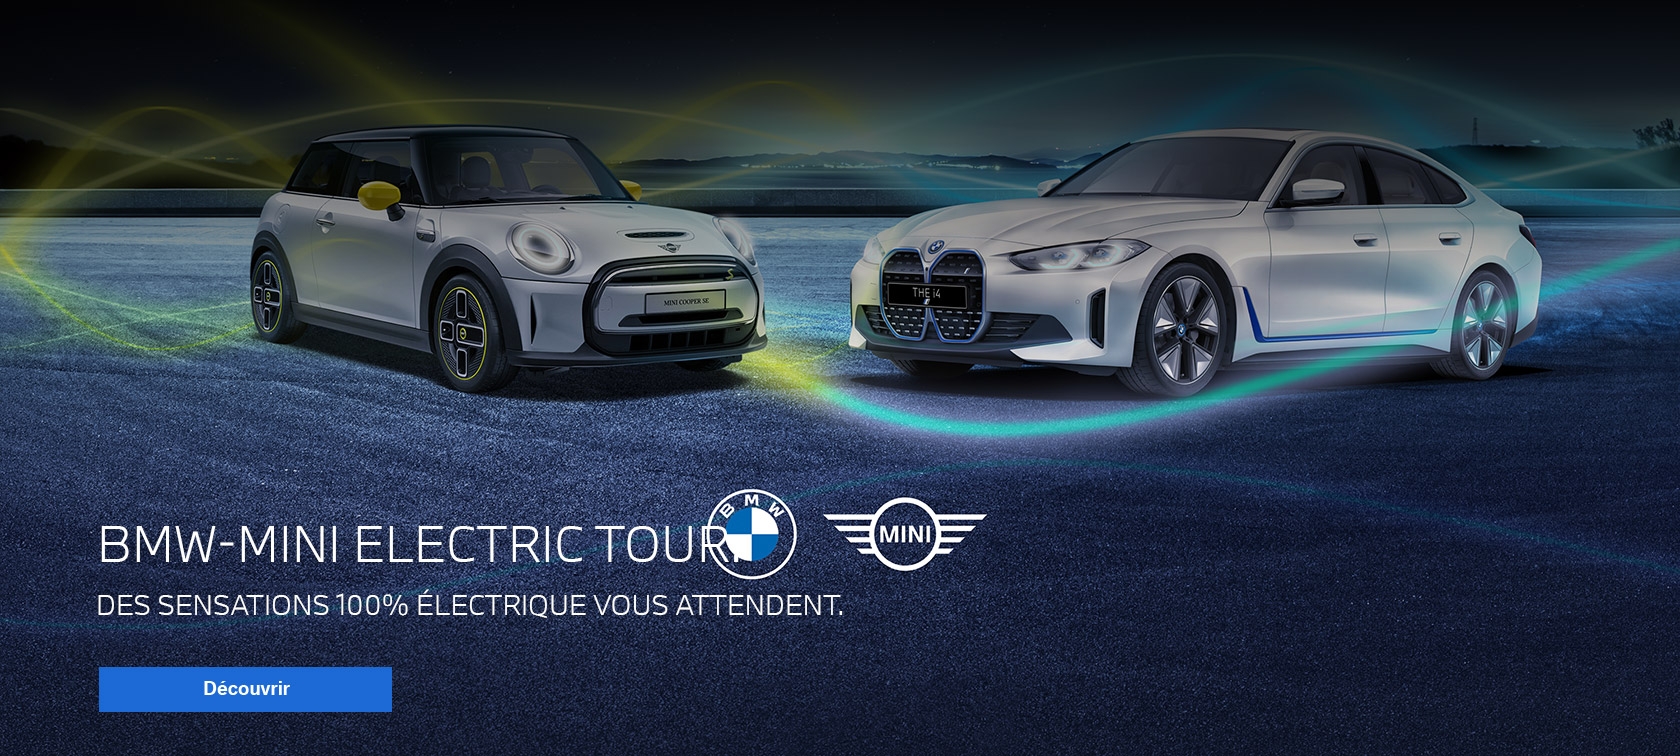 BMW-MINI Electric Tour.